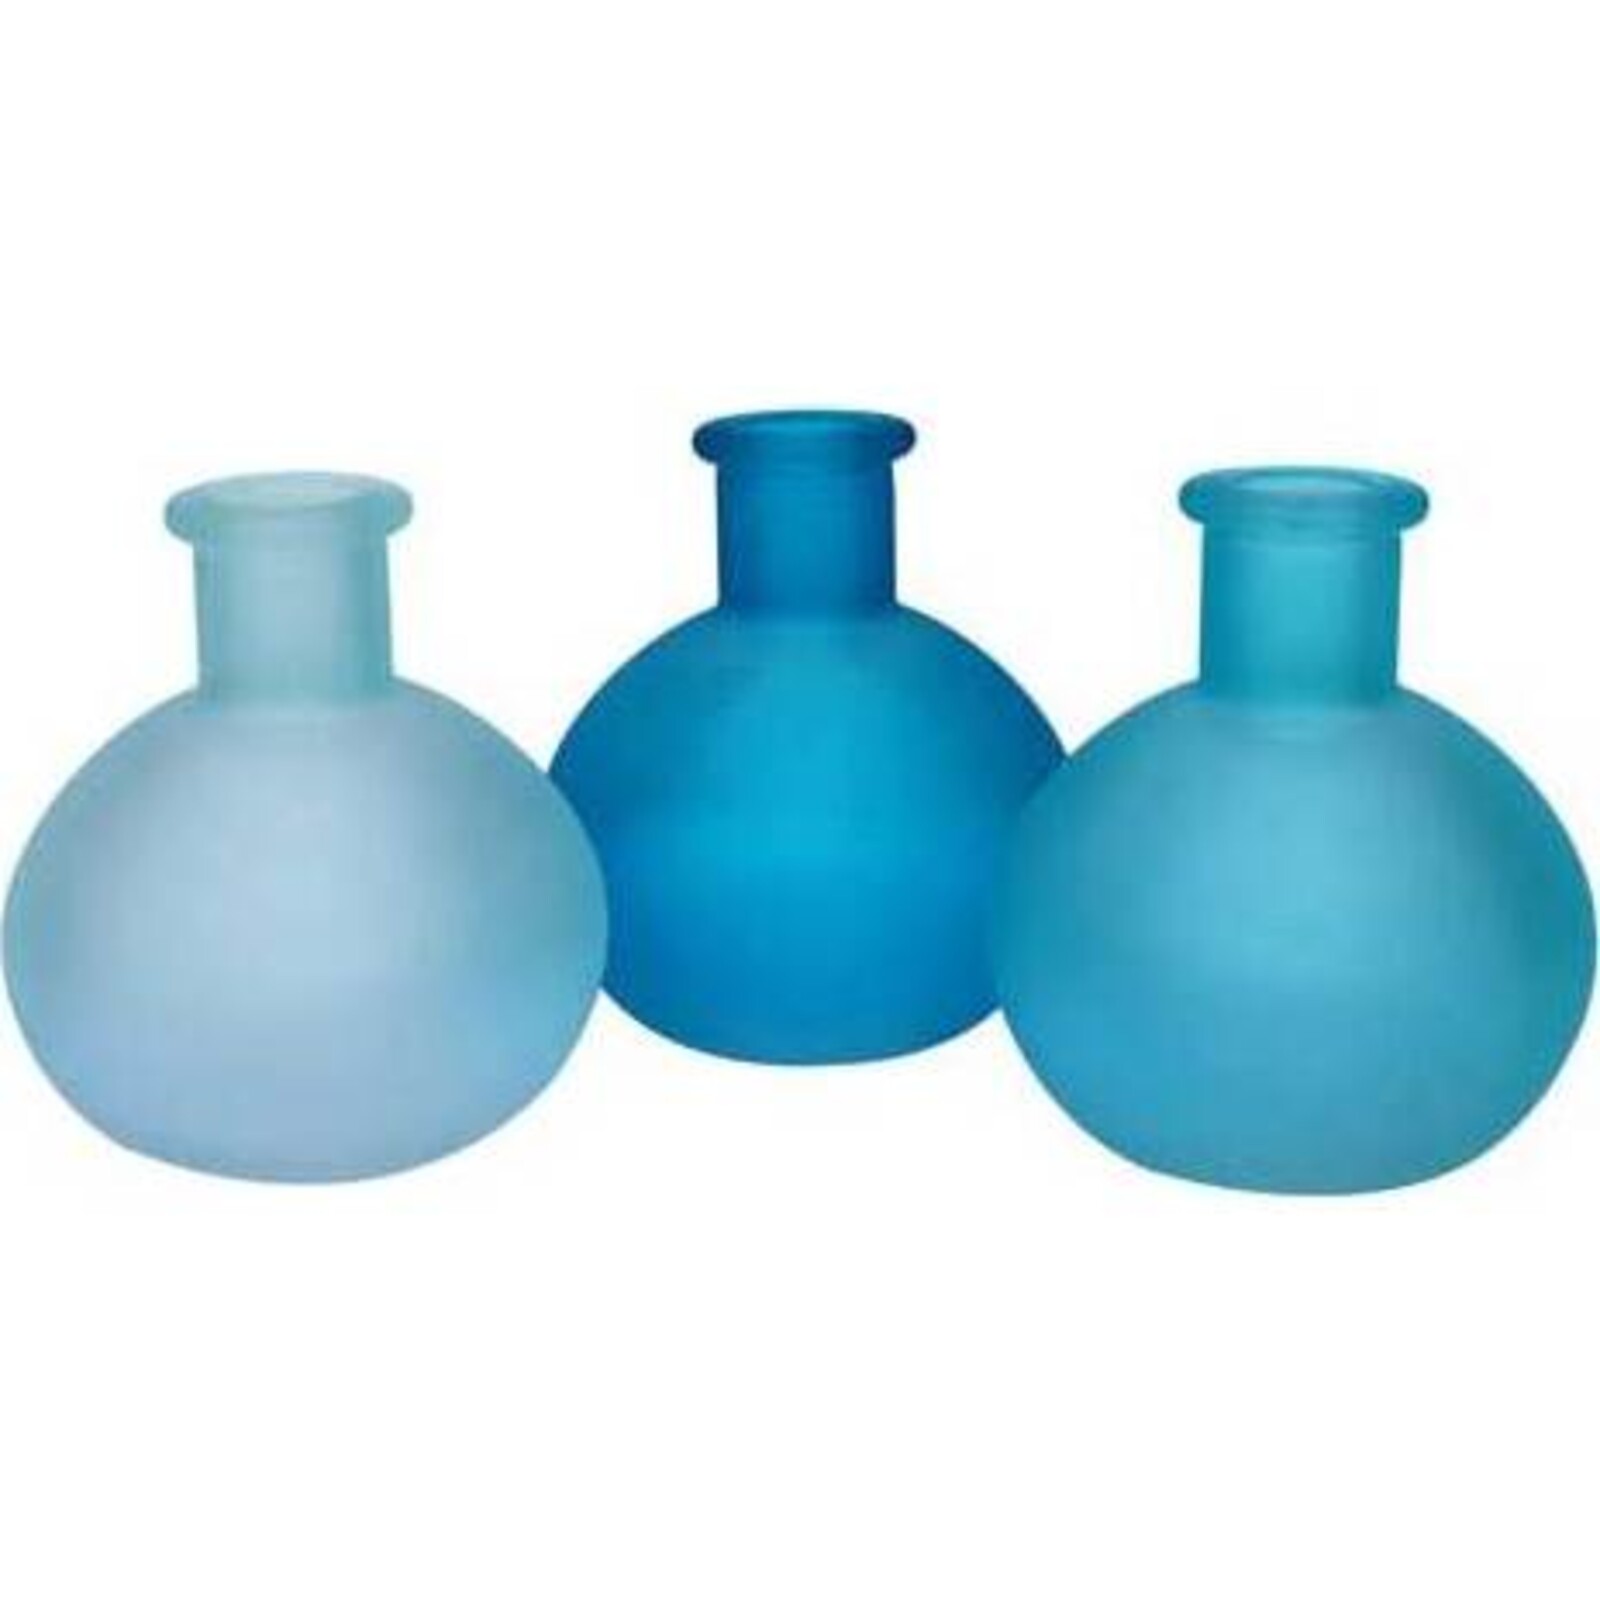 Trio Of Bottles - Blue Shade